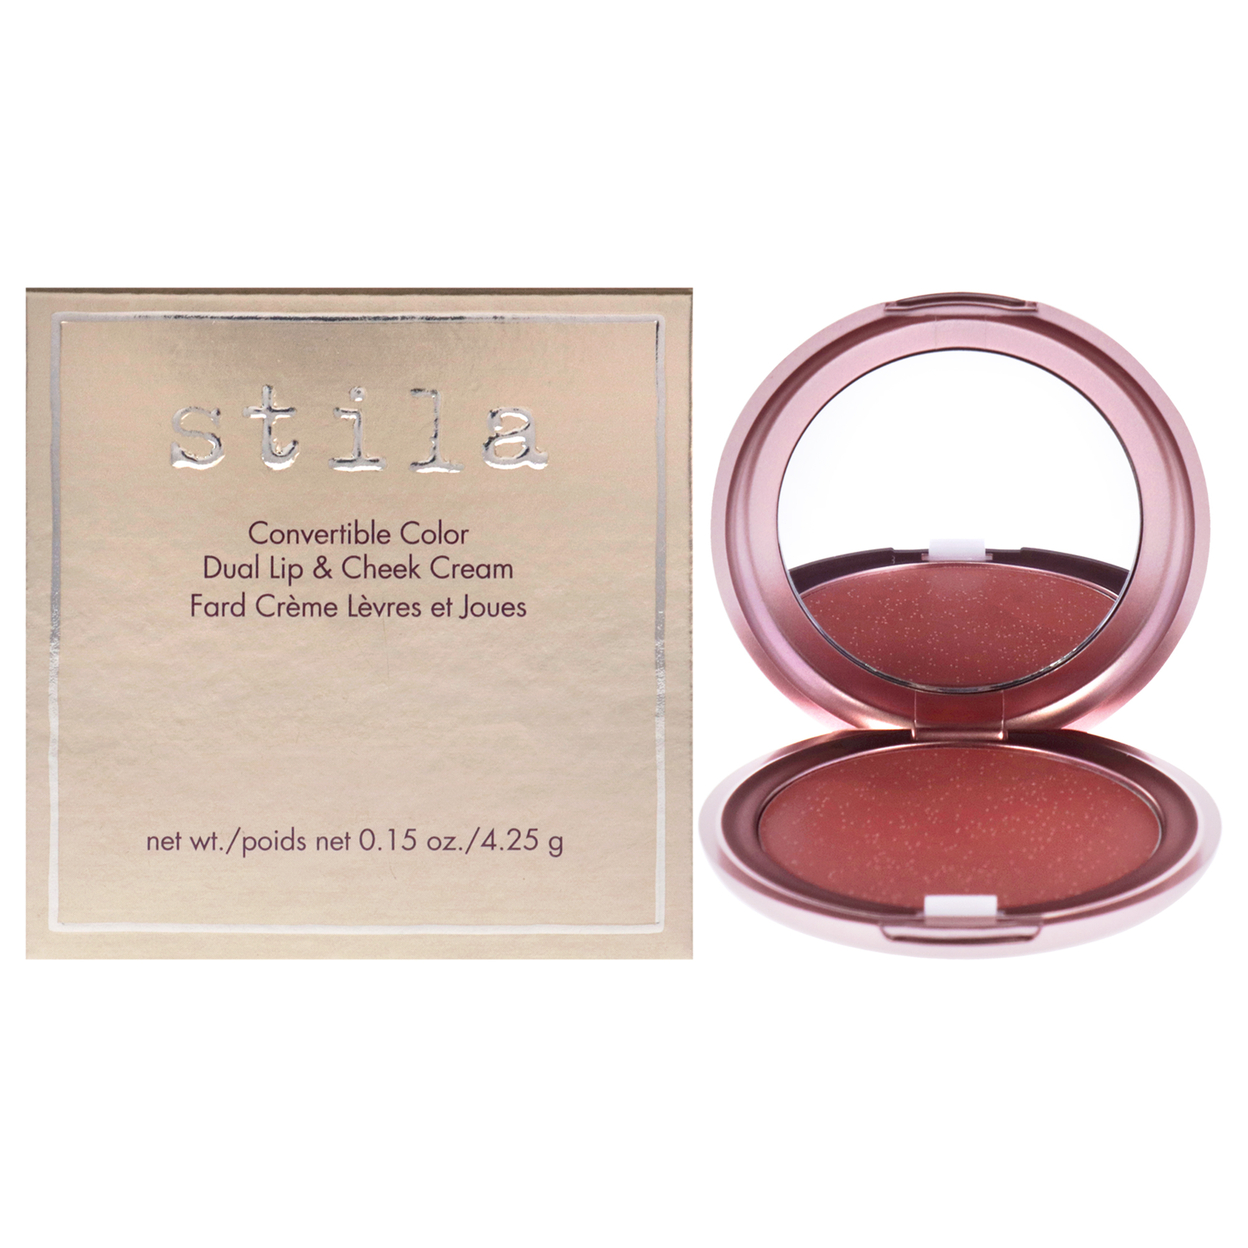 Stila Convertible Color Dual Lip And Cheek Cream - Peony Makeup 0.15 Oz